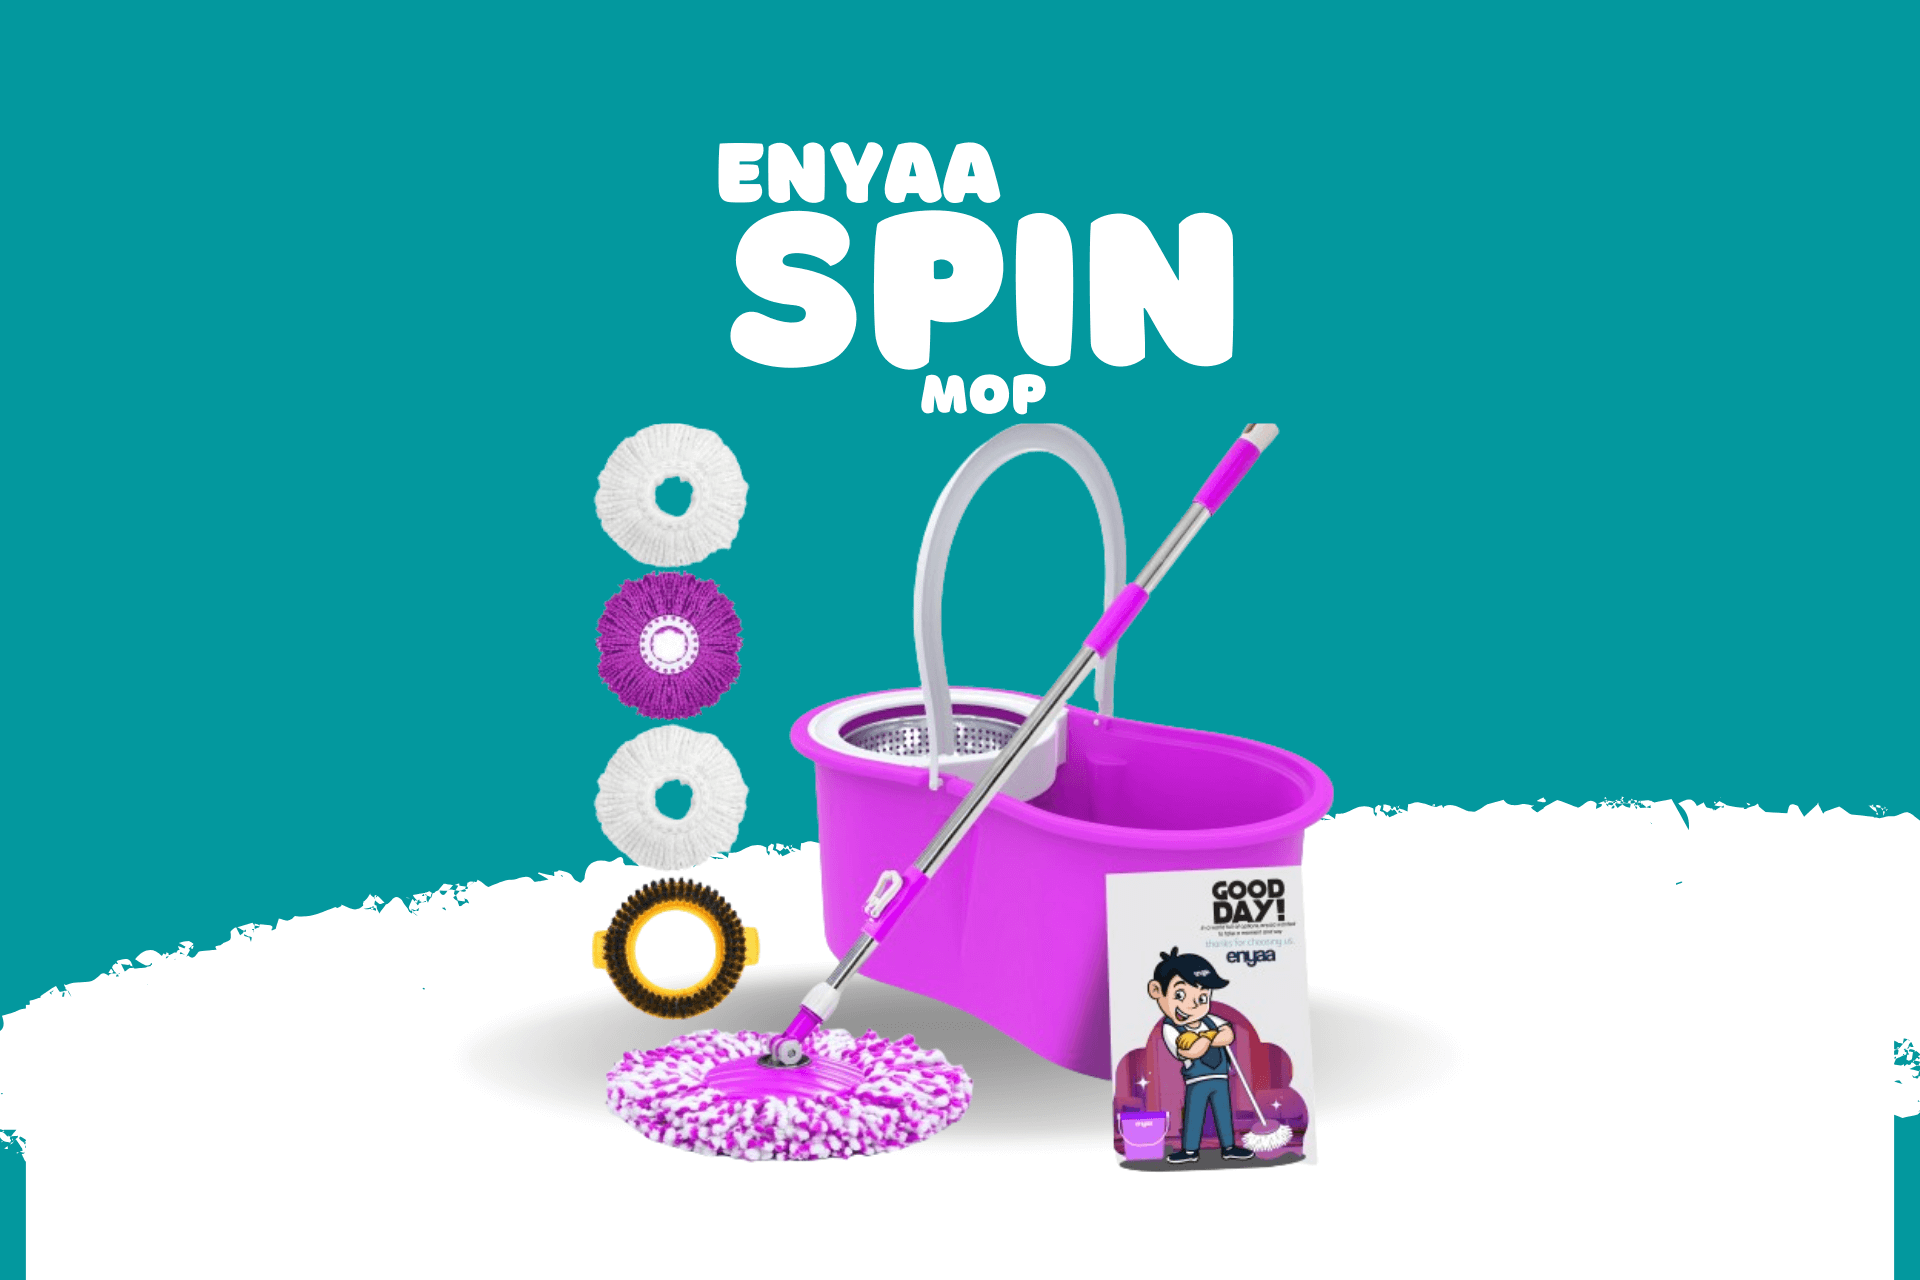 enyaa spin mop purple